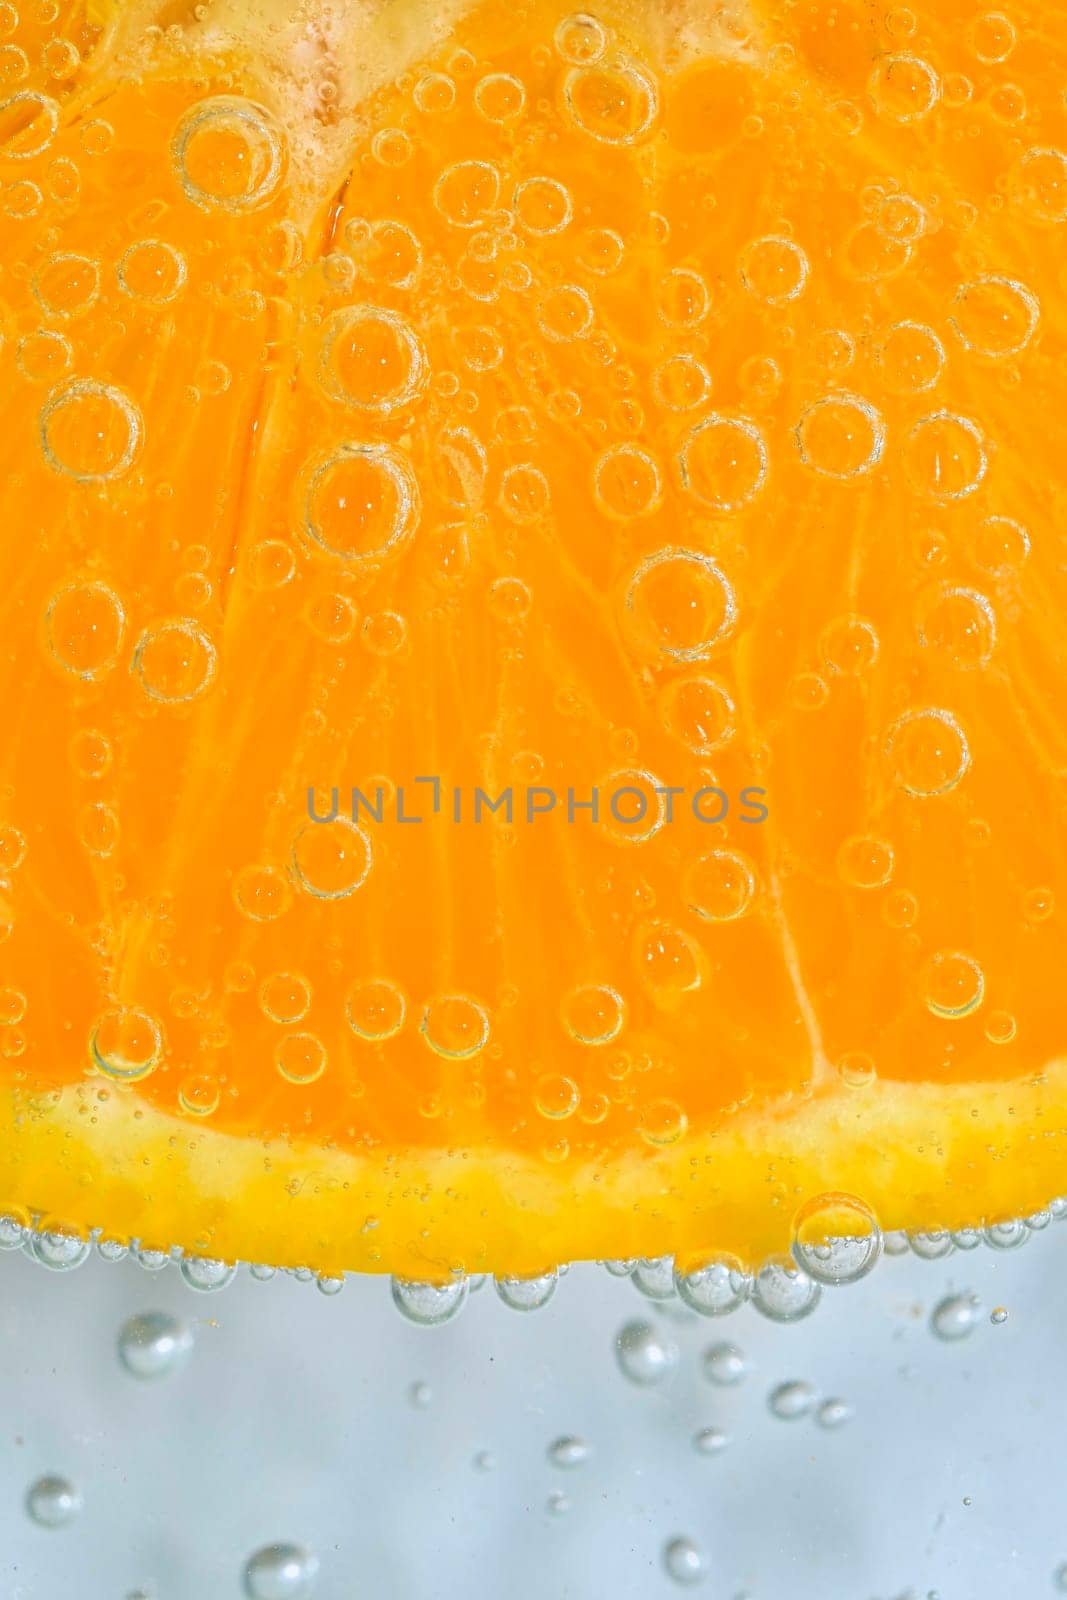 Slice of ripe orange fruit in water on white background. Close-up of orange fruit in liquid with bubbles. Slice of ripe orange fruit in sparkling water. Macro image of fruit in carbonated water